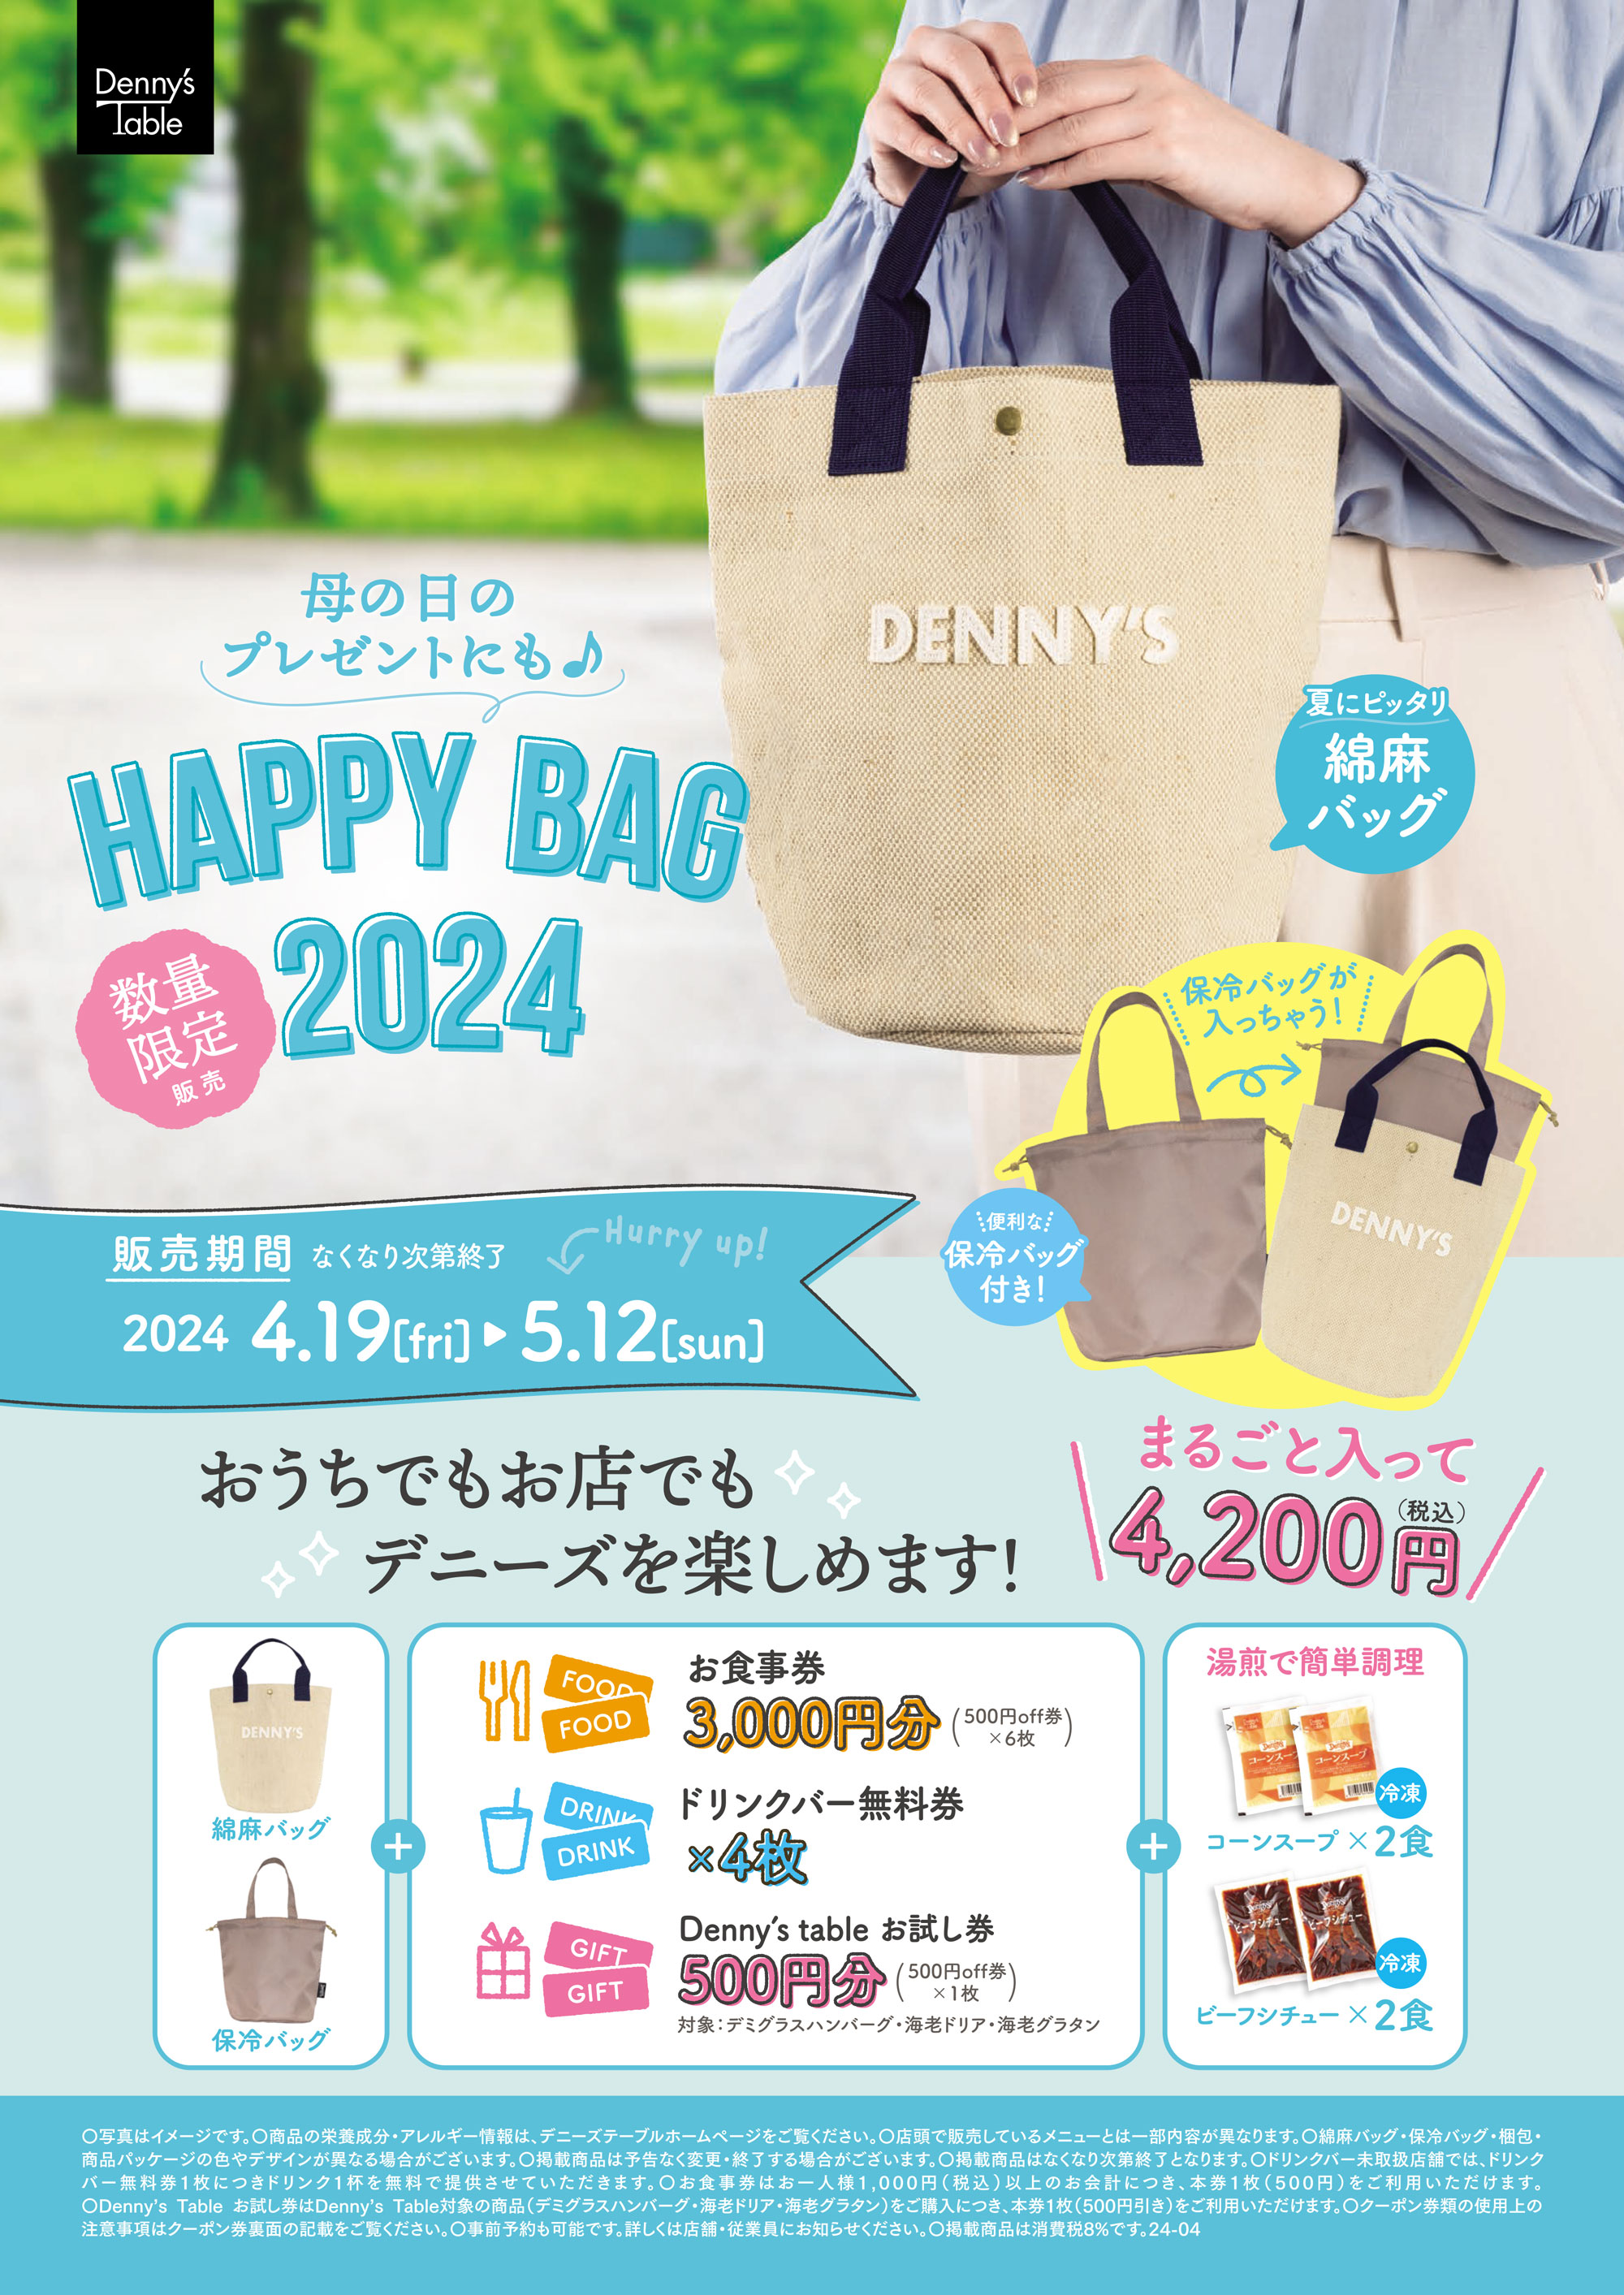 HAPPY BAG 2024